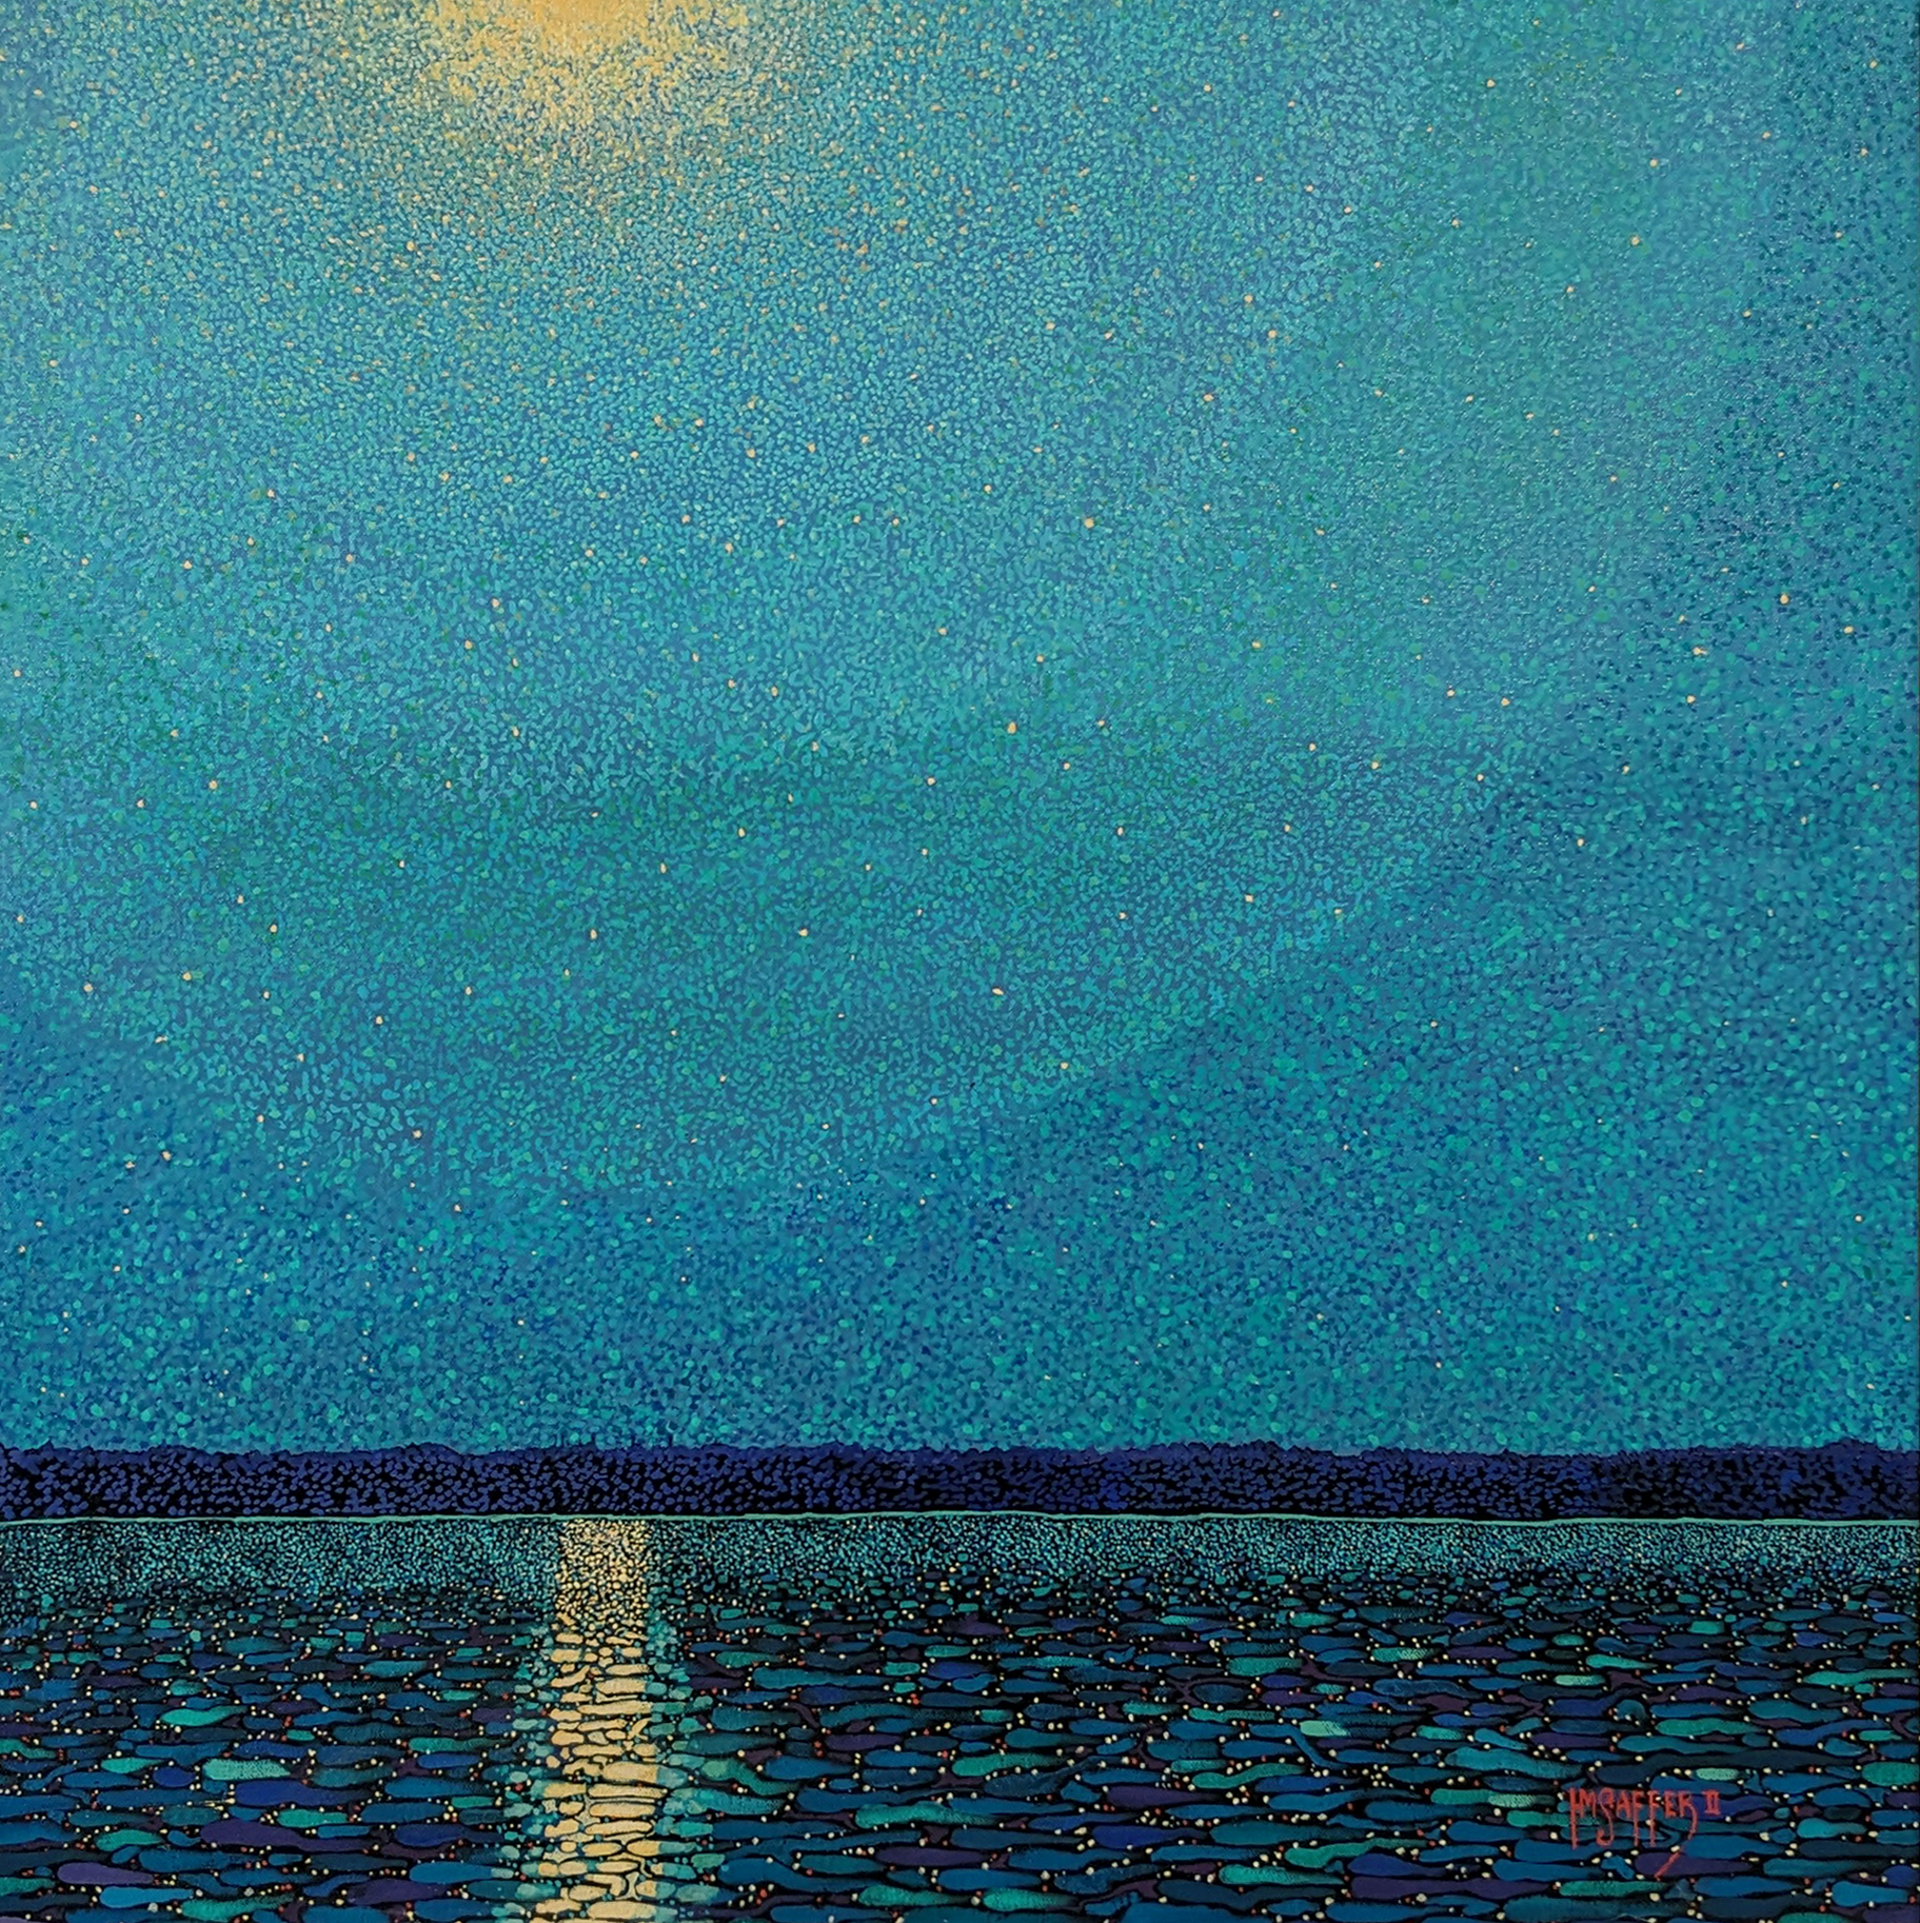 Moon Waters by H.M. Saffer II